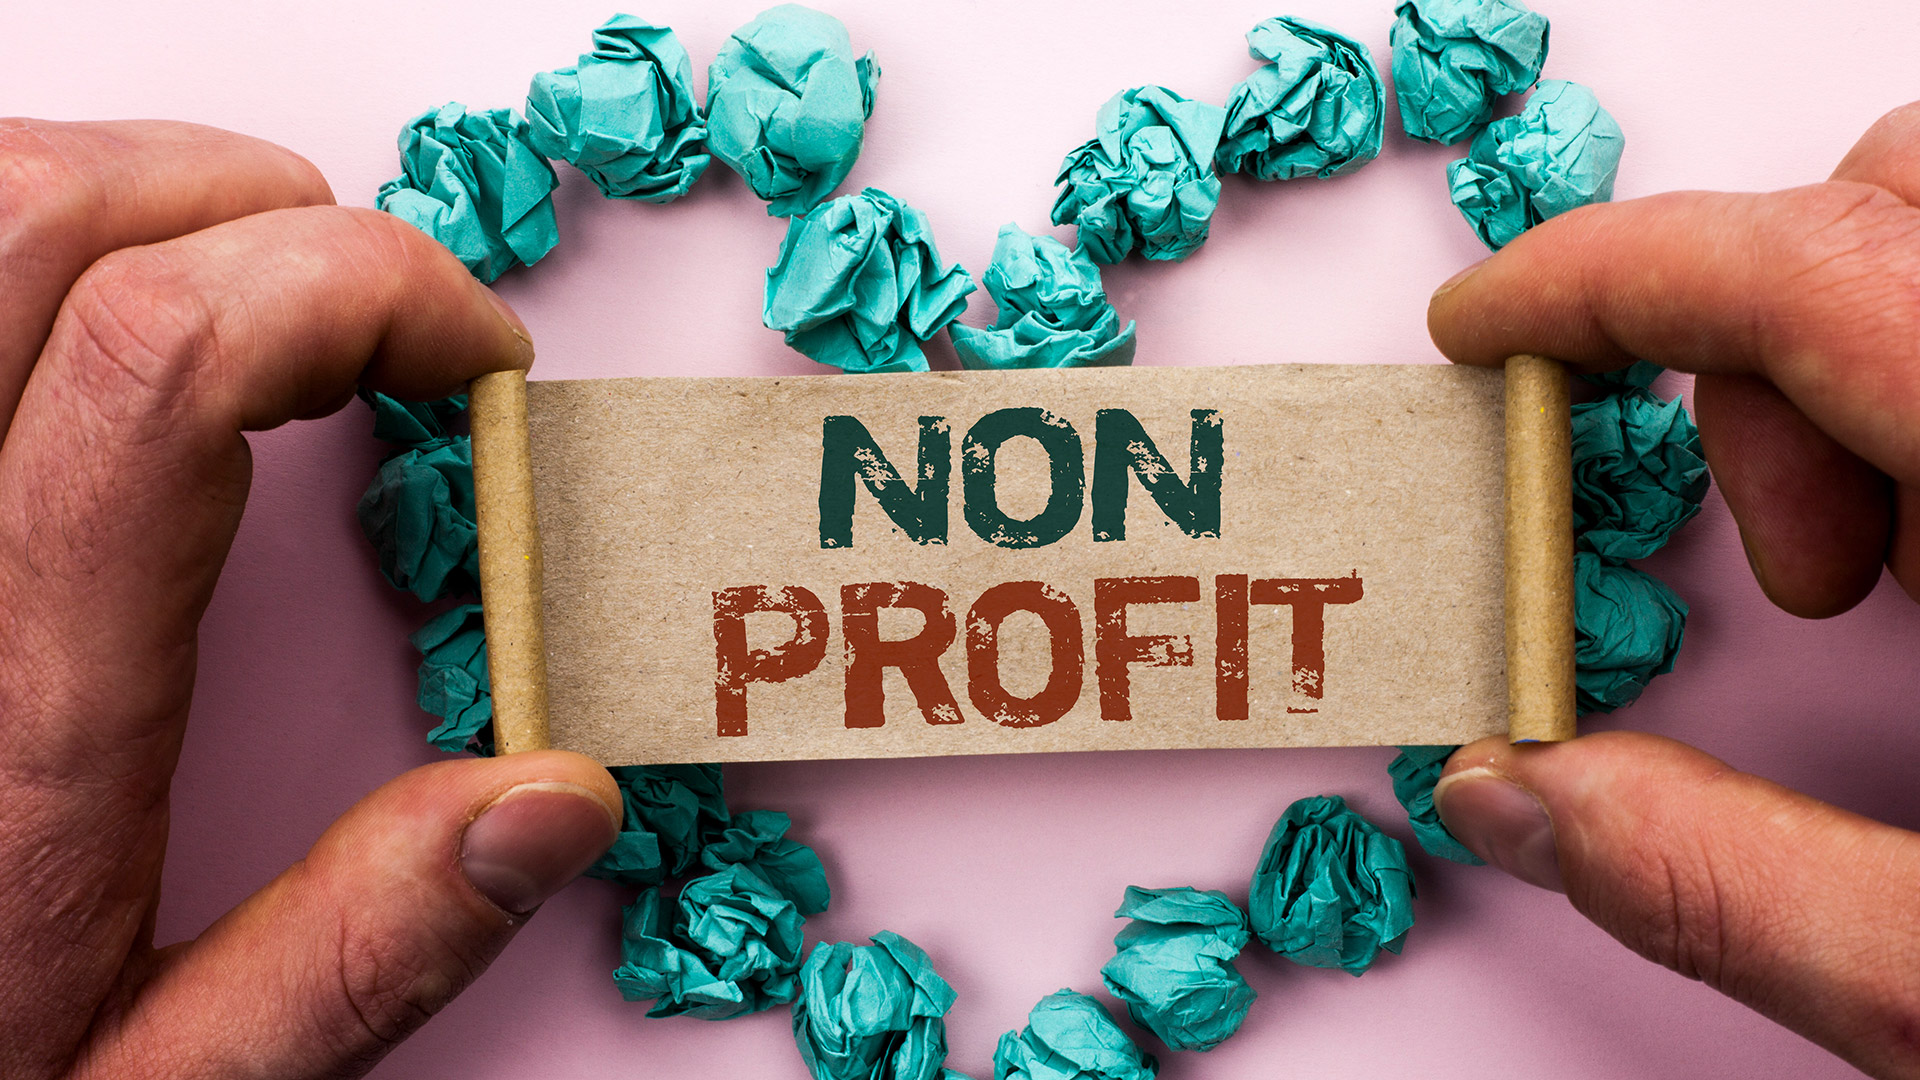 Nonprofit industry